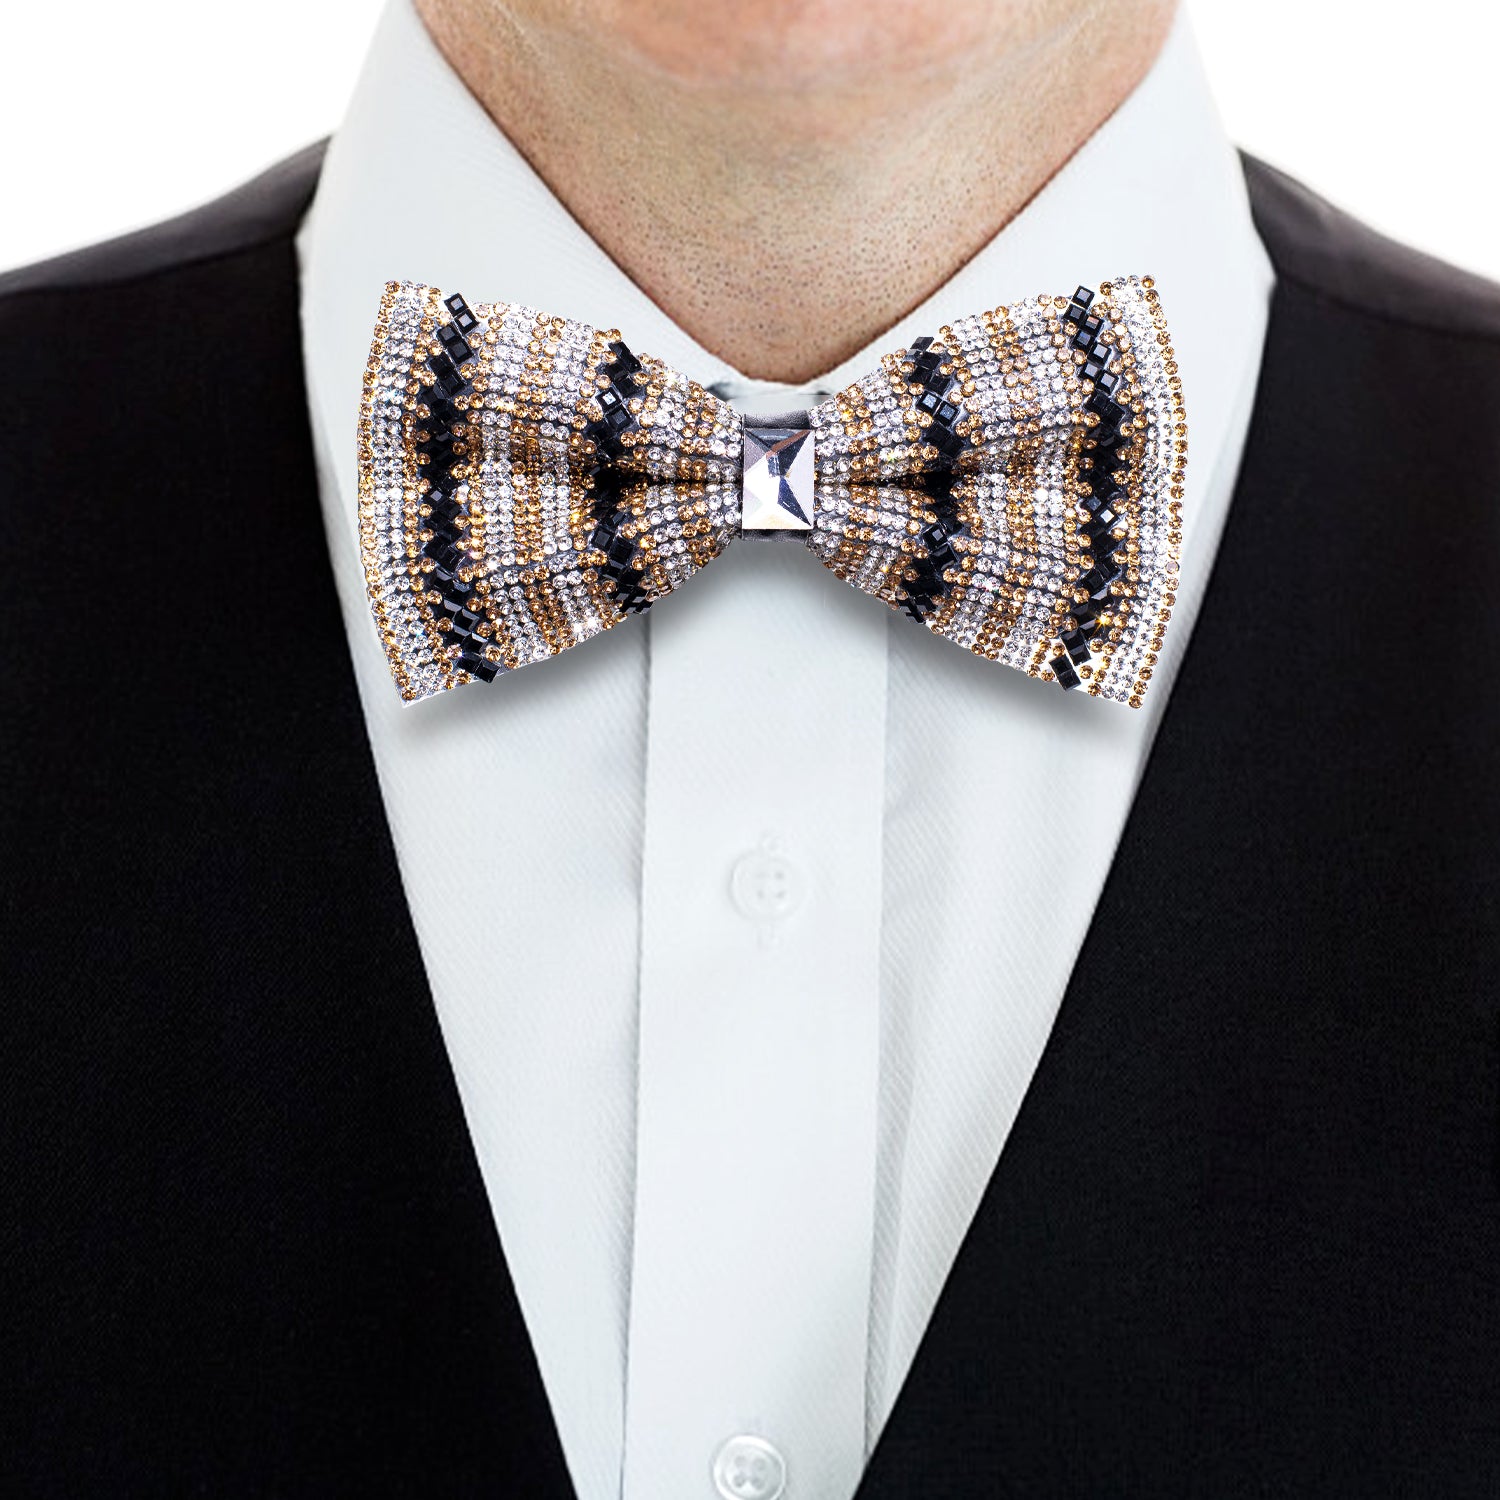 Luxury Golden Black White Shining Rhinestone Pre-tied Adjustable Length Bow Tie